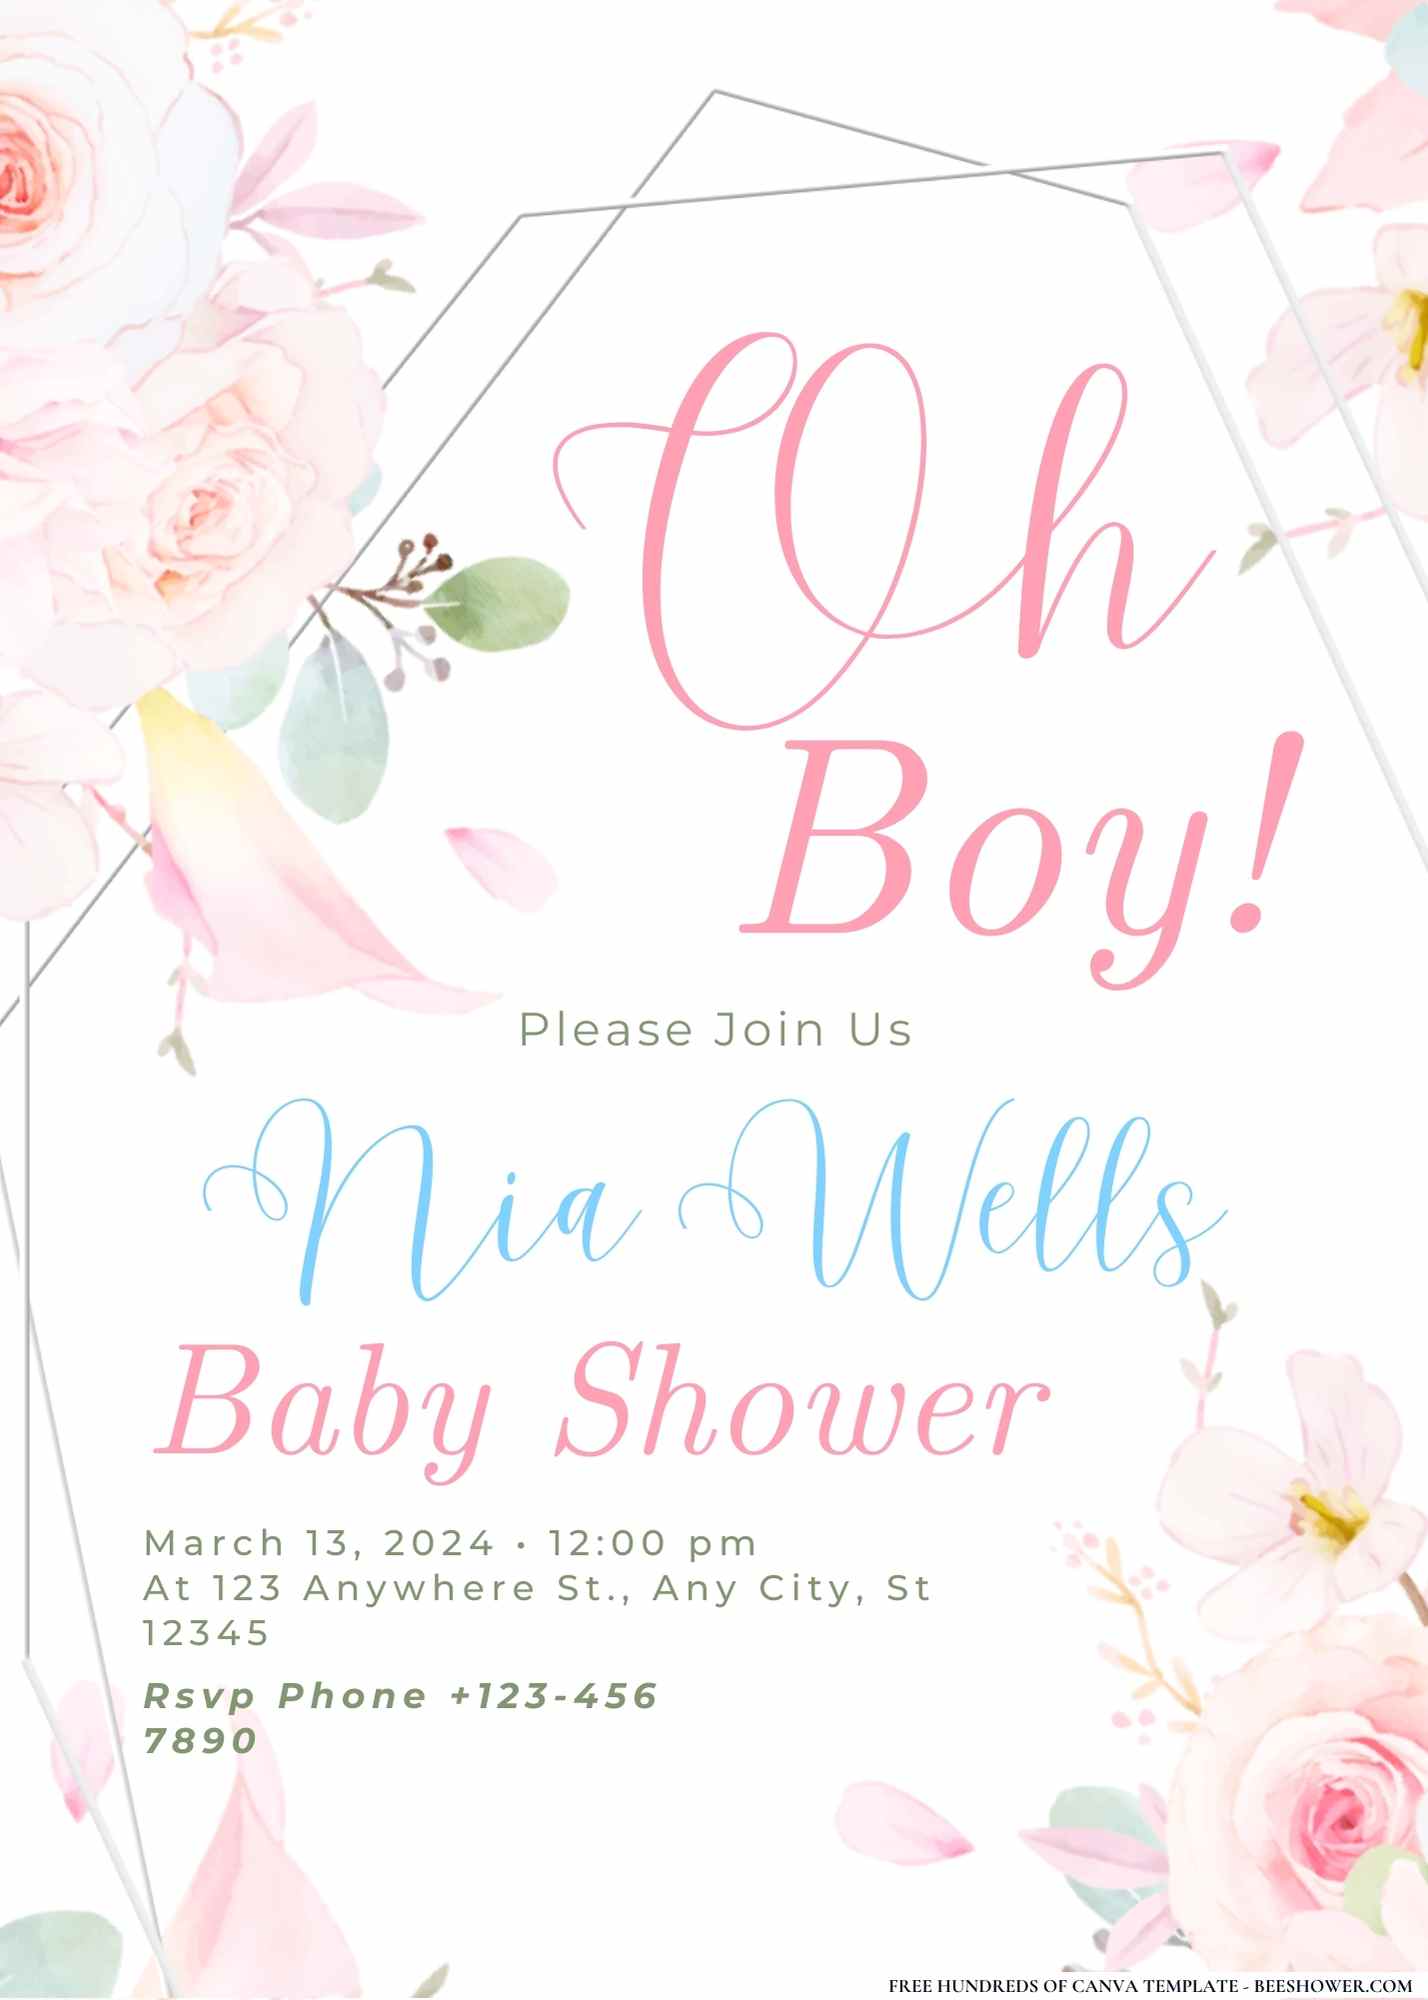 Bouquet of Joy Baby Shower Invitation